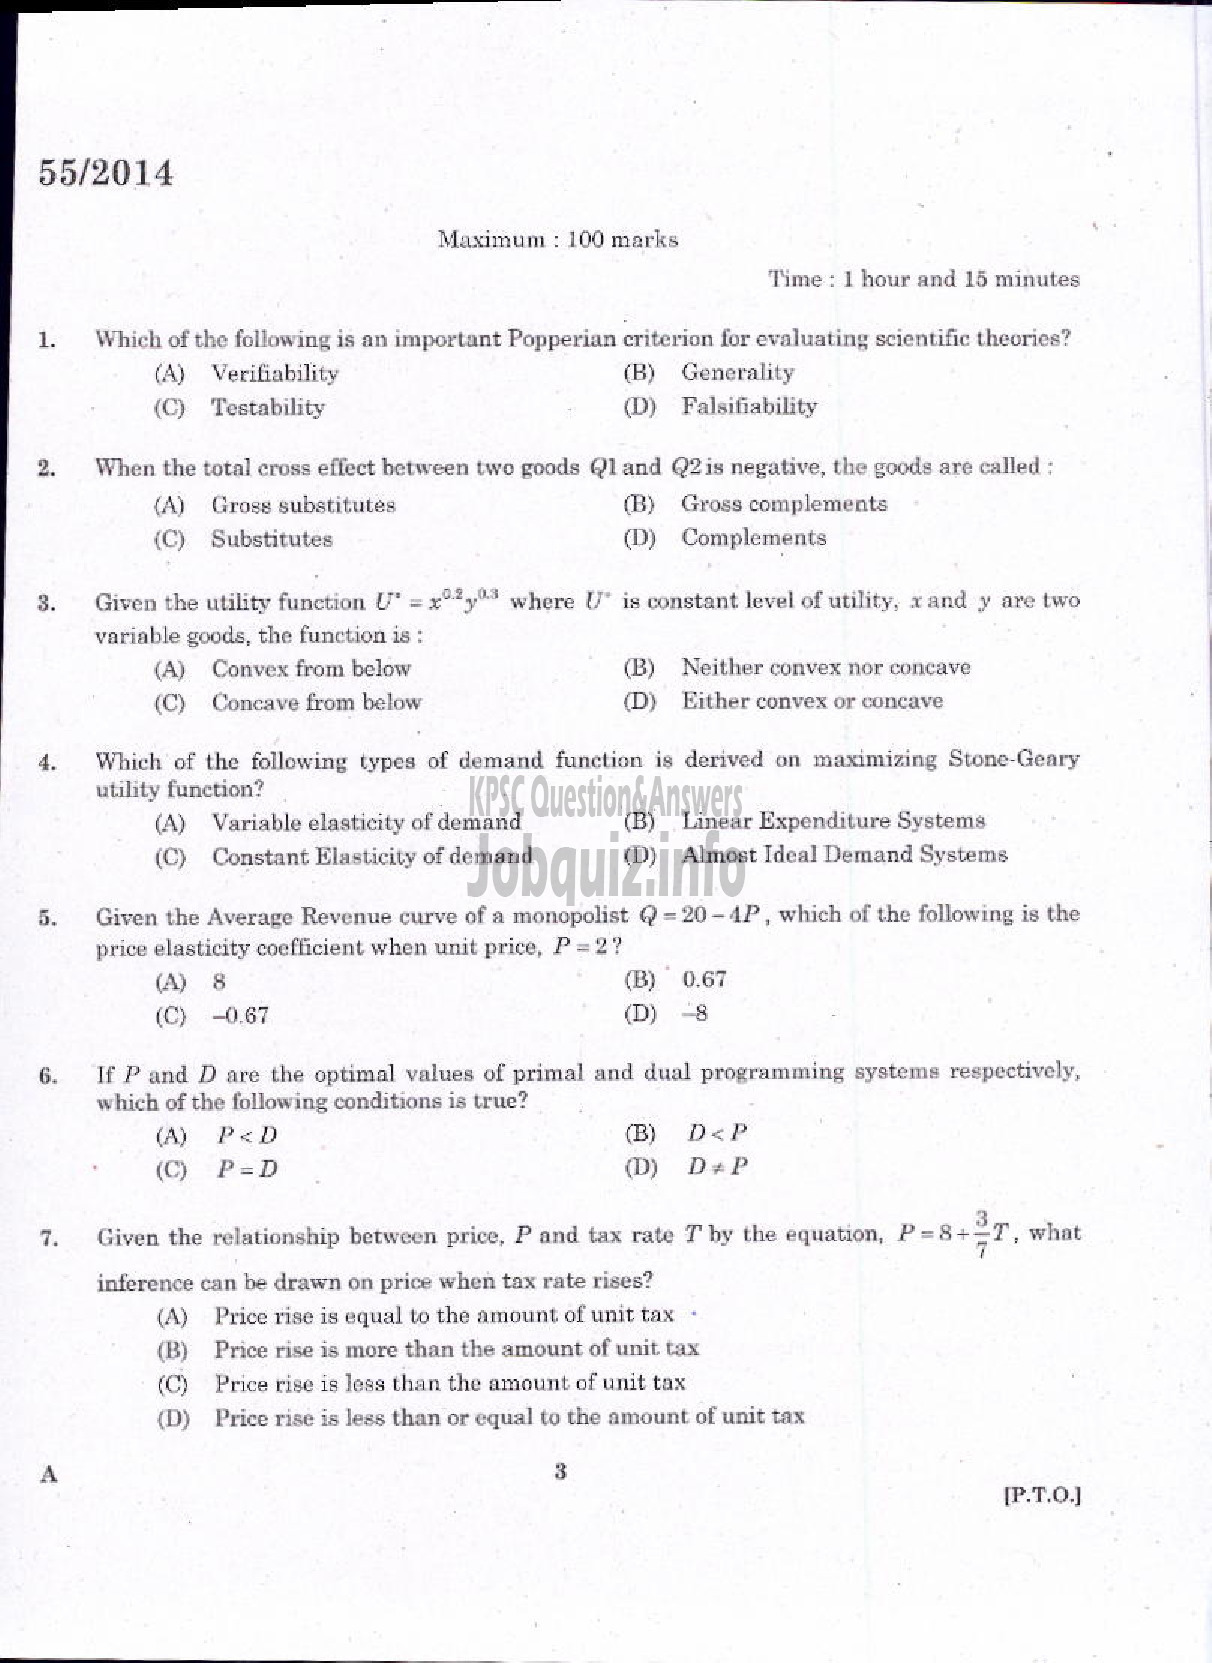 Kerala PSC Question Paper - LECTURER IN ECONOMICS KERALA COLLEGIATE EDUCATION-1